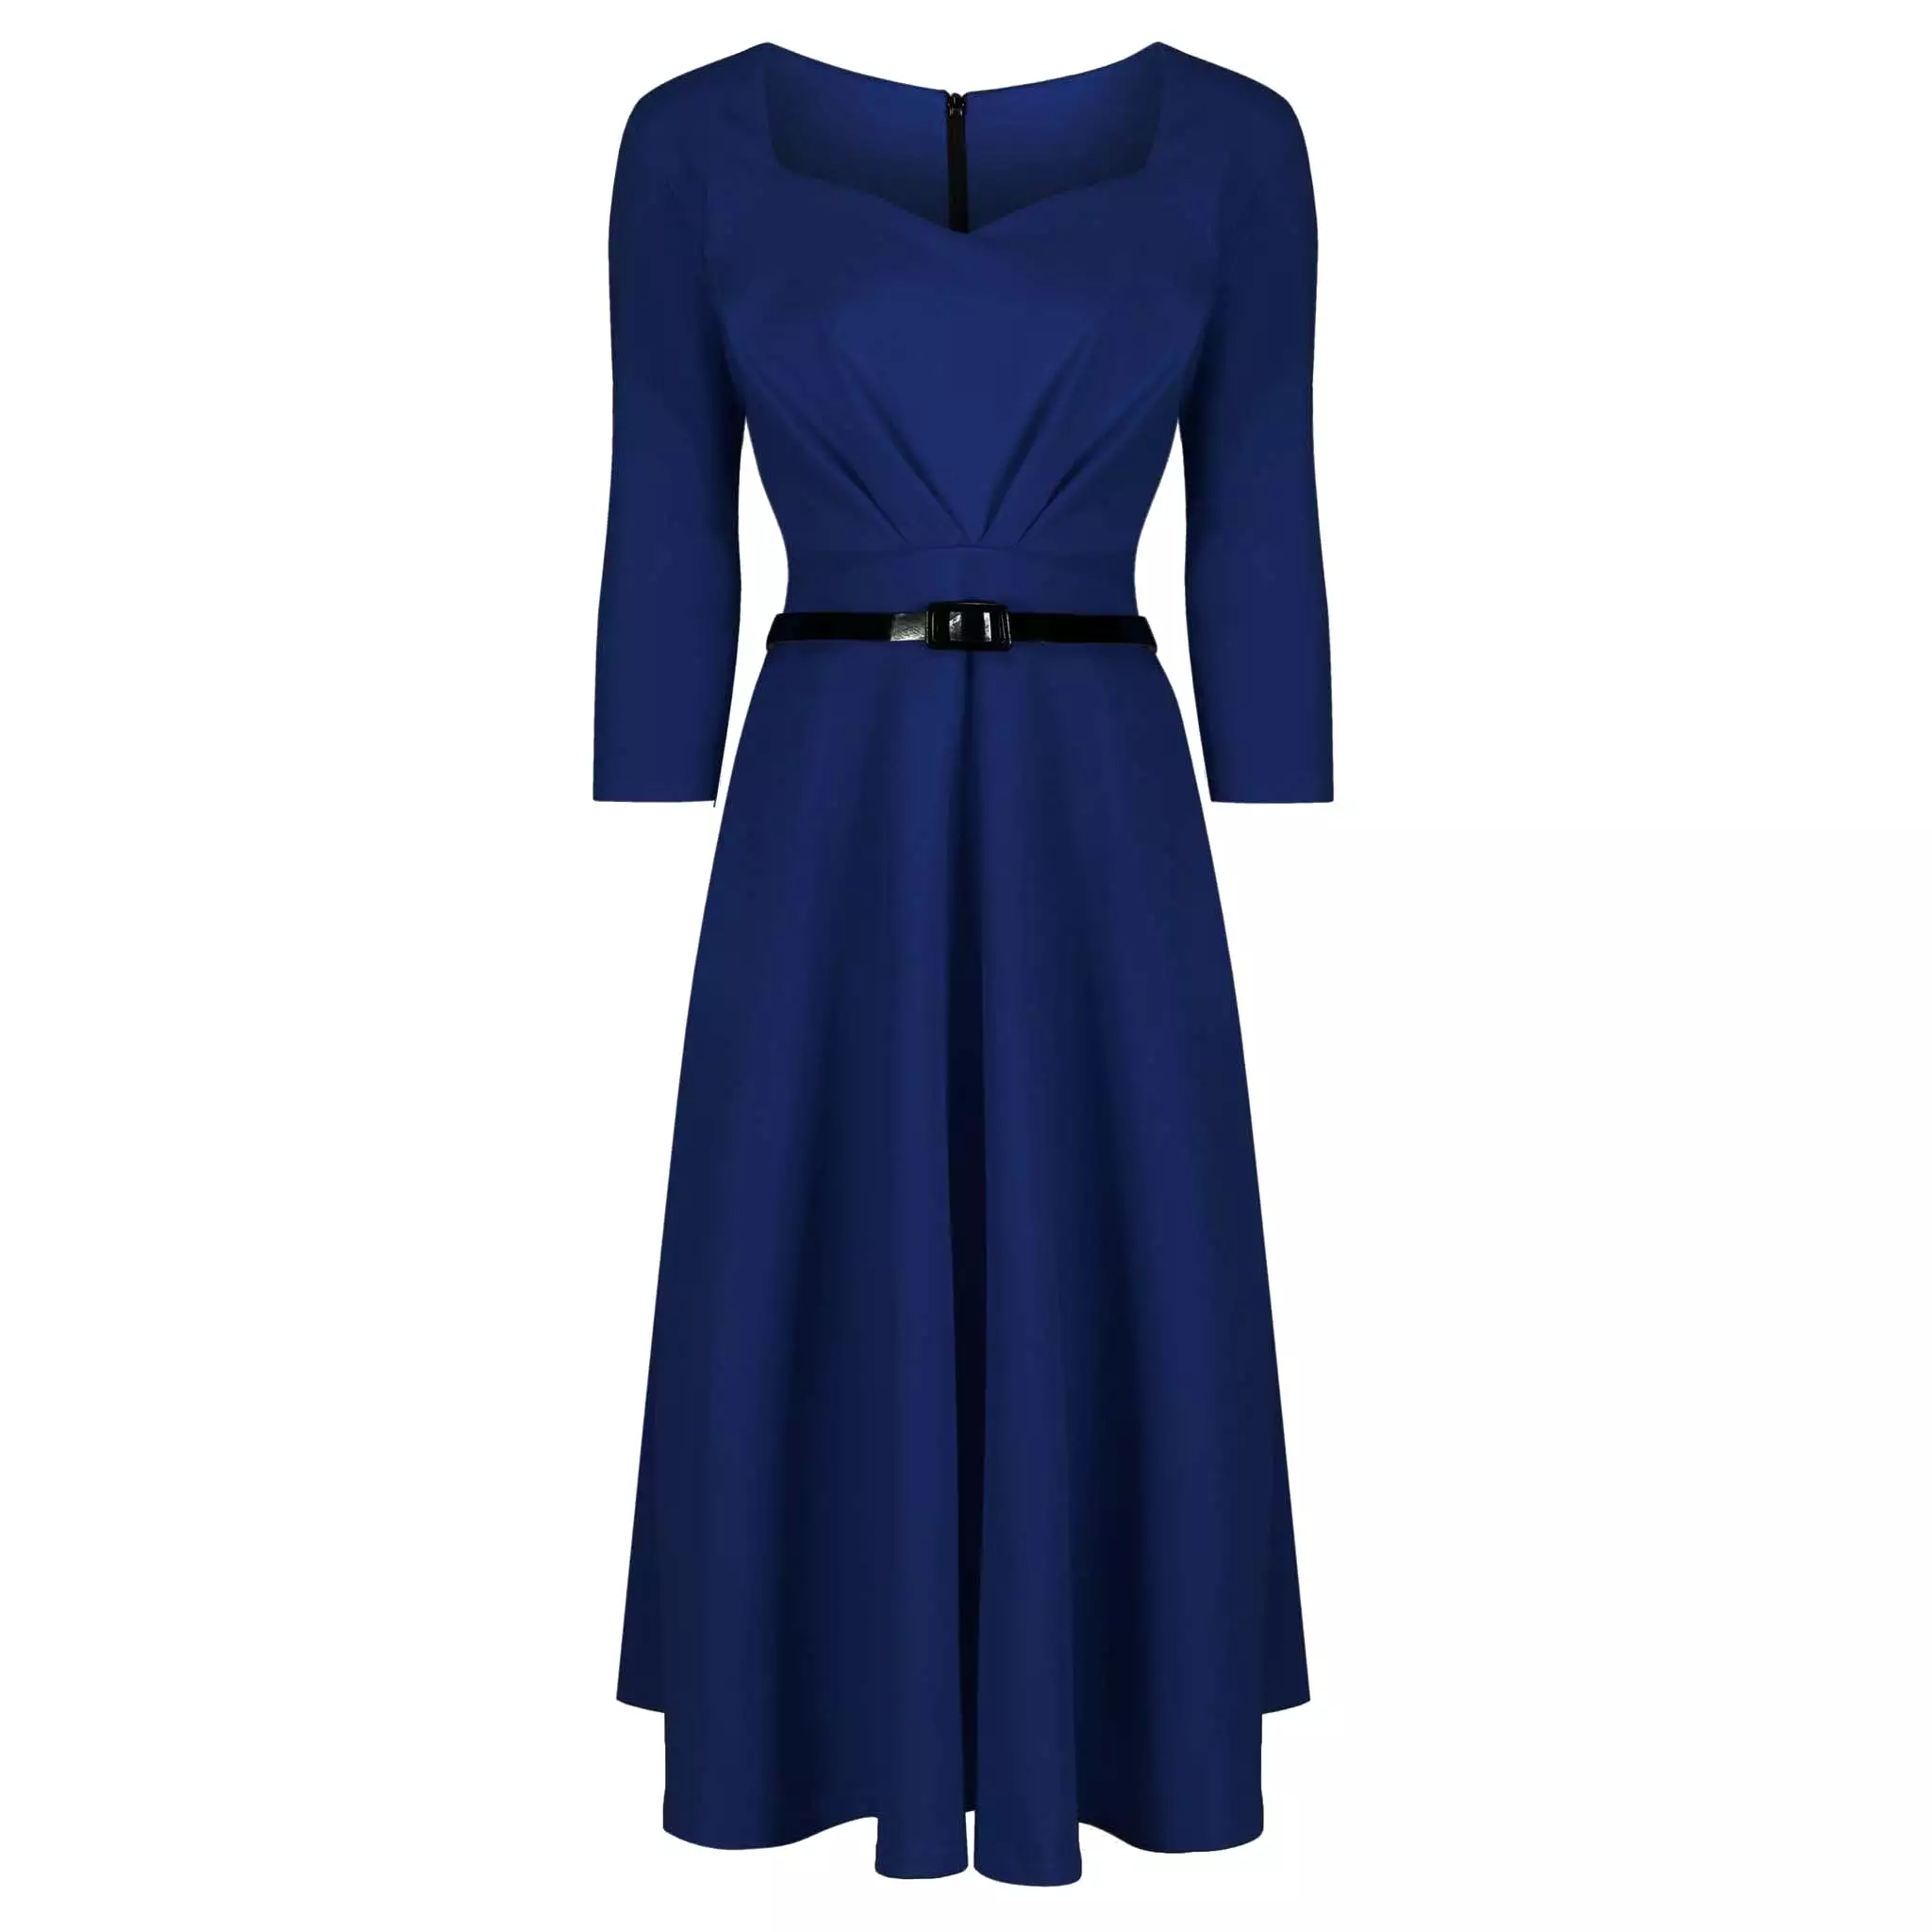 Navy Blue 3/4 Sleeve Belted 50s Swing Dress